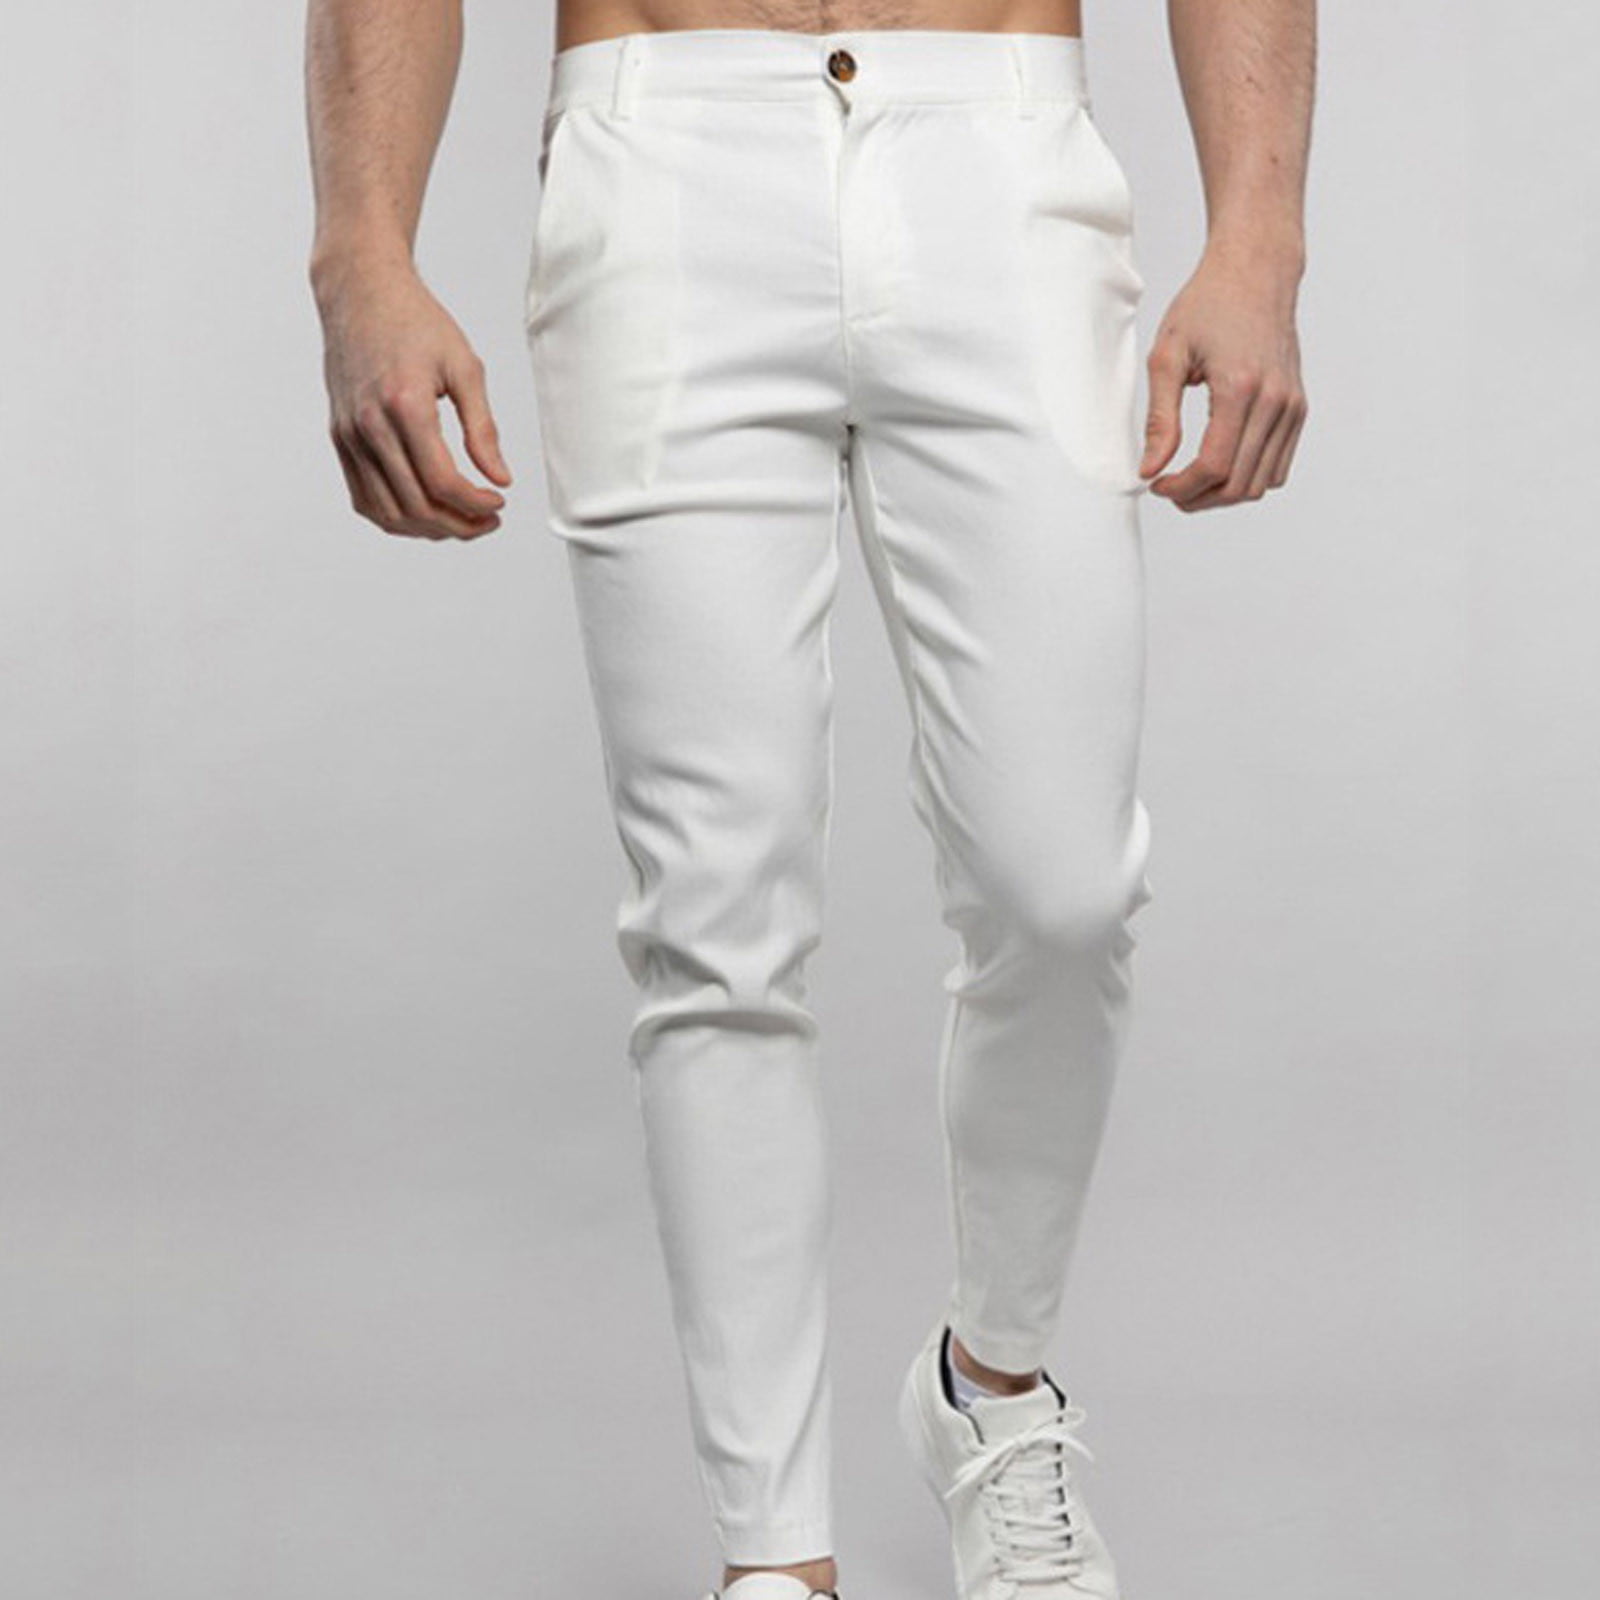 Mens Pants Men Casual Trend Lace Up Elastic Reflective Pants Hip Hop  Fluorescent Pants Night Sports Pants  Walmartcom